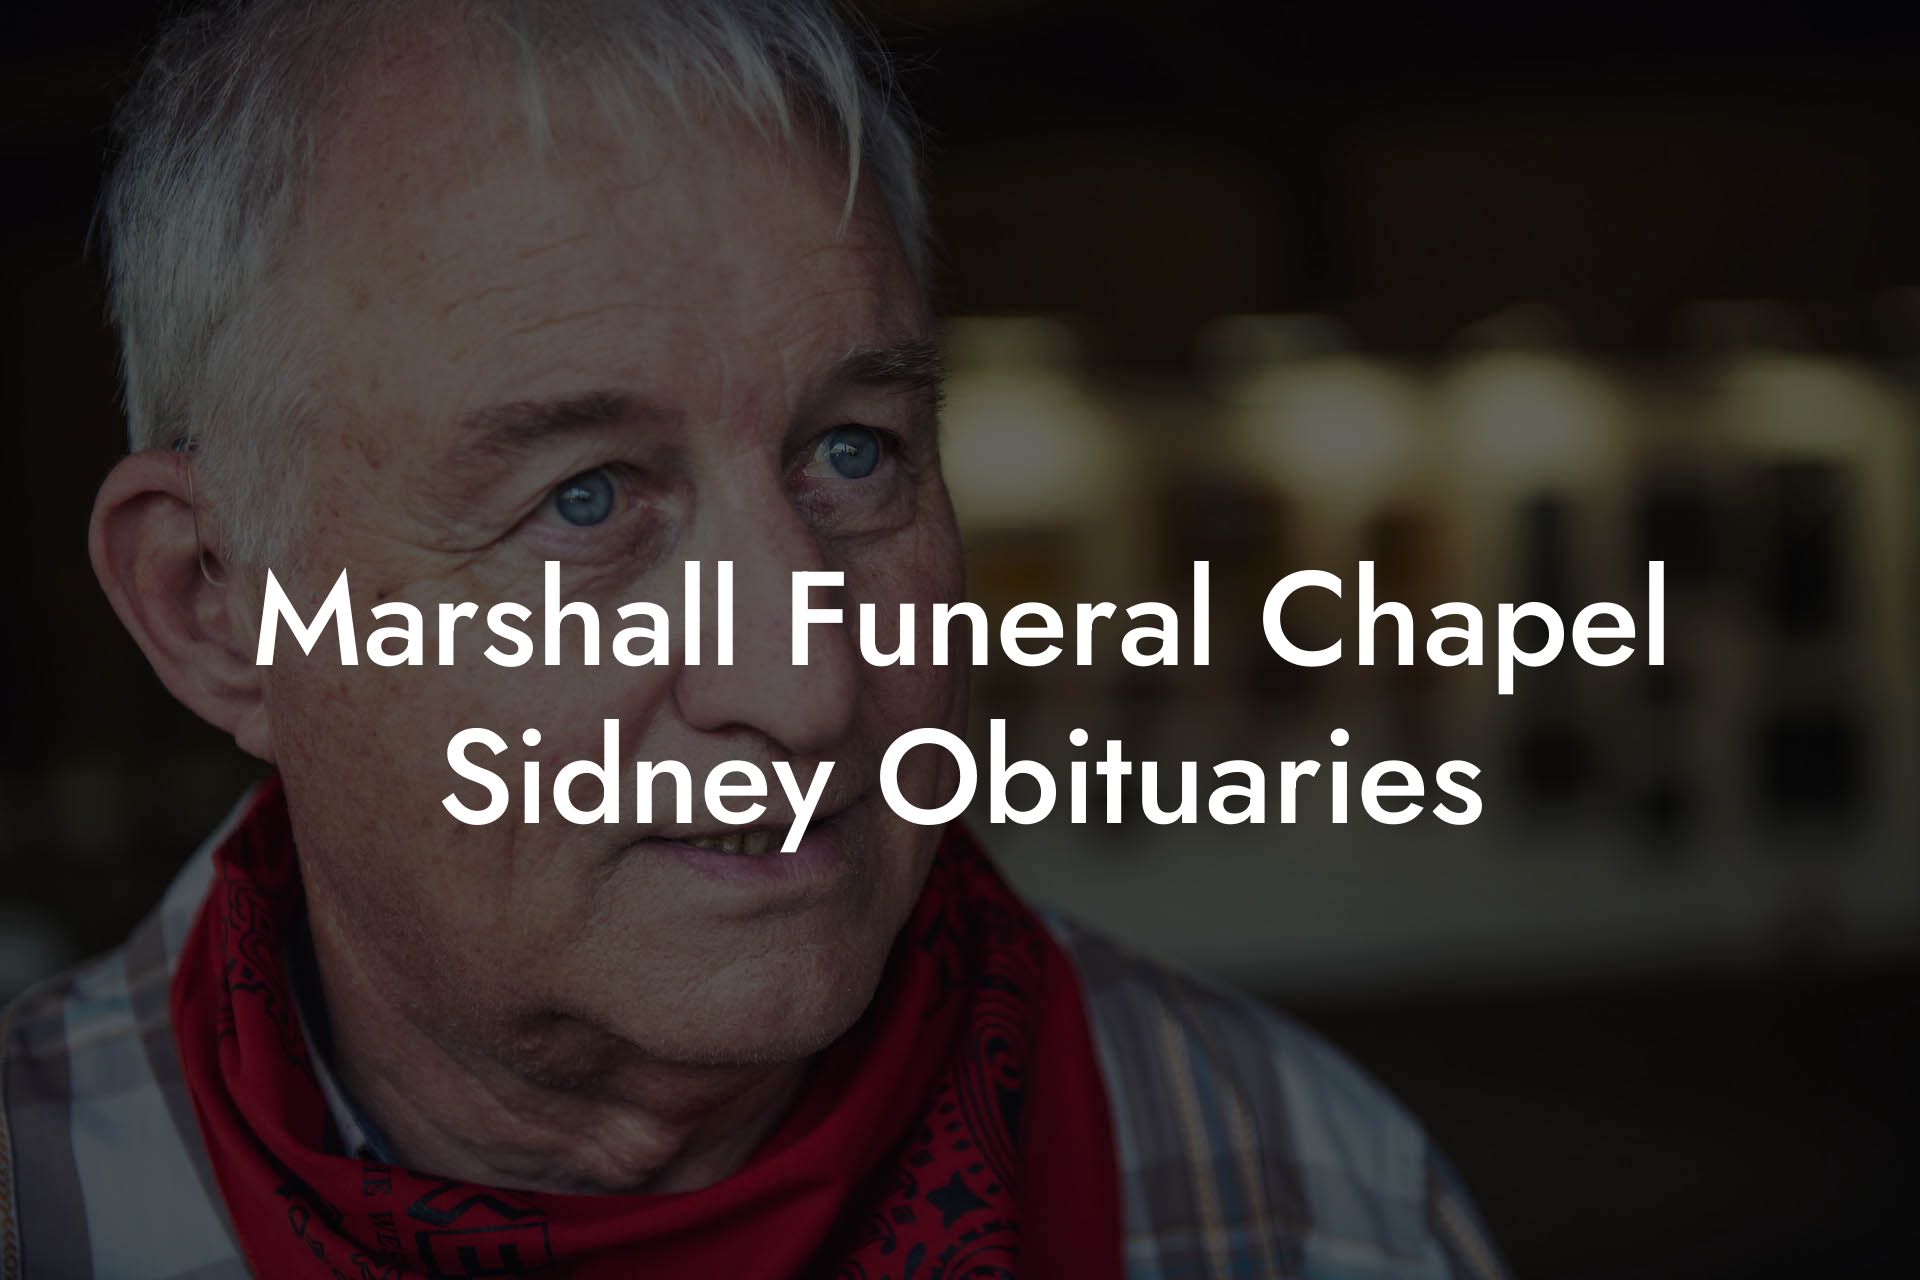 Marshall Funeral Chapel Sidney Obituaries